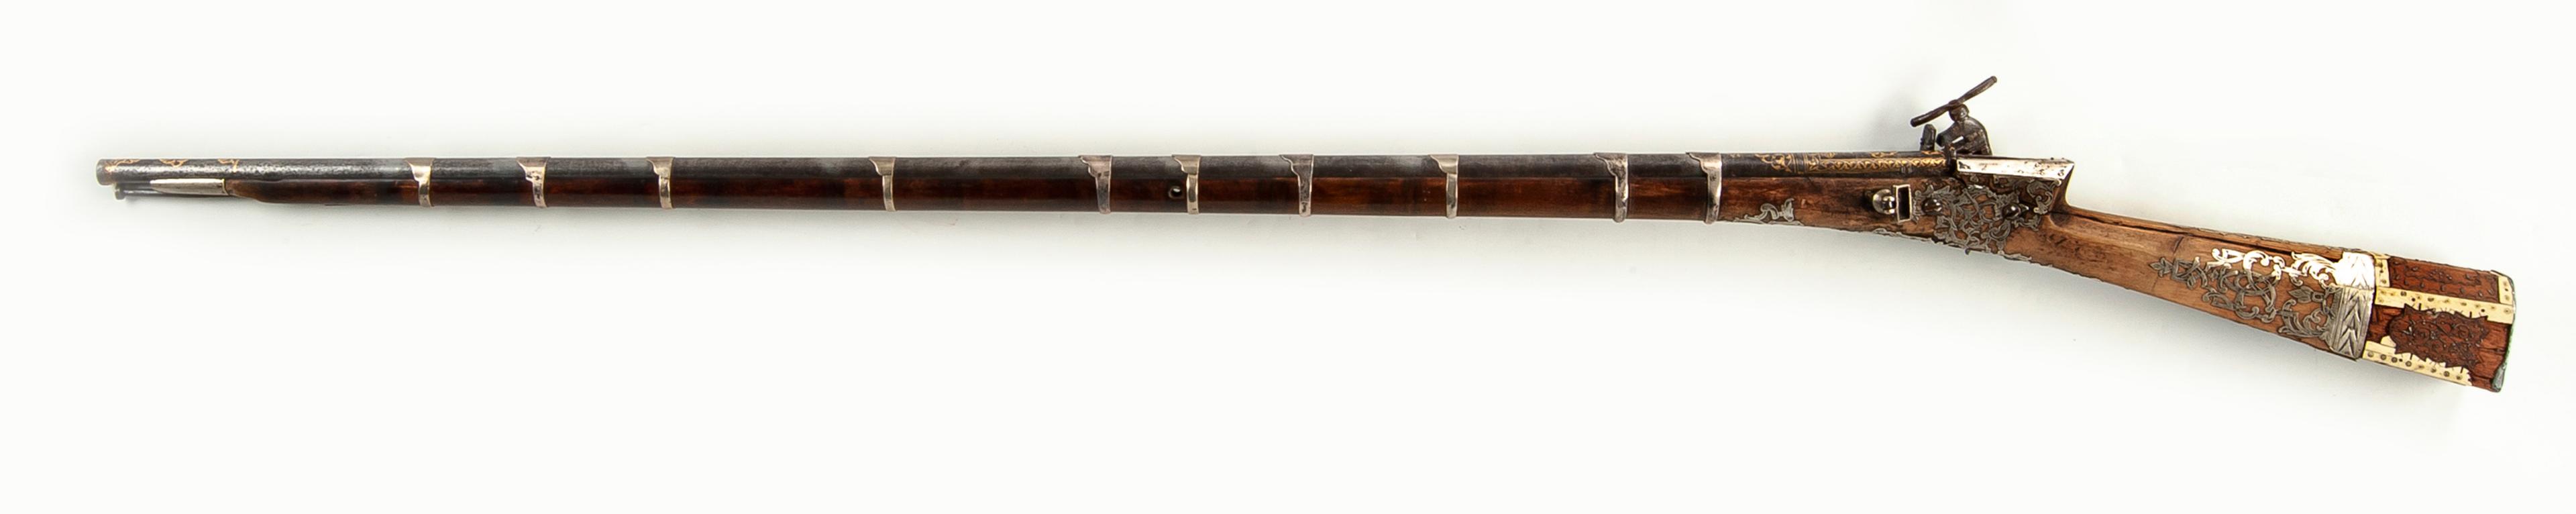 Turkish/Middle Eastern Decorated Long Gun